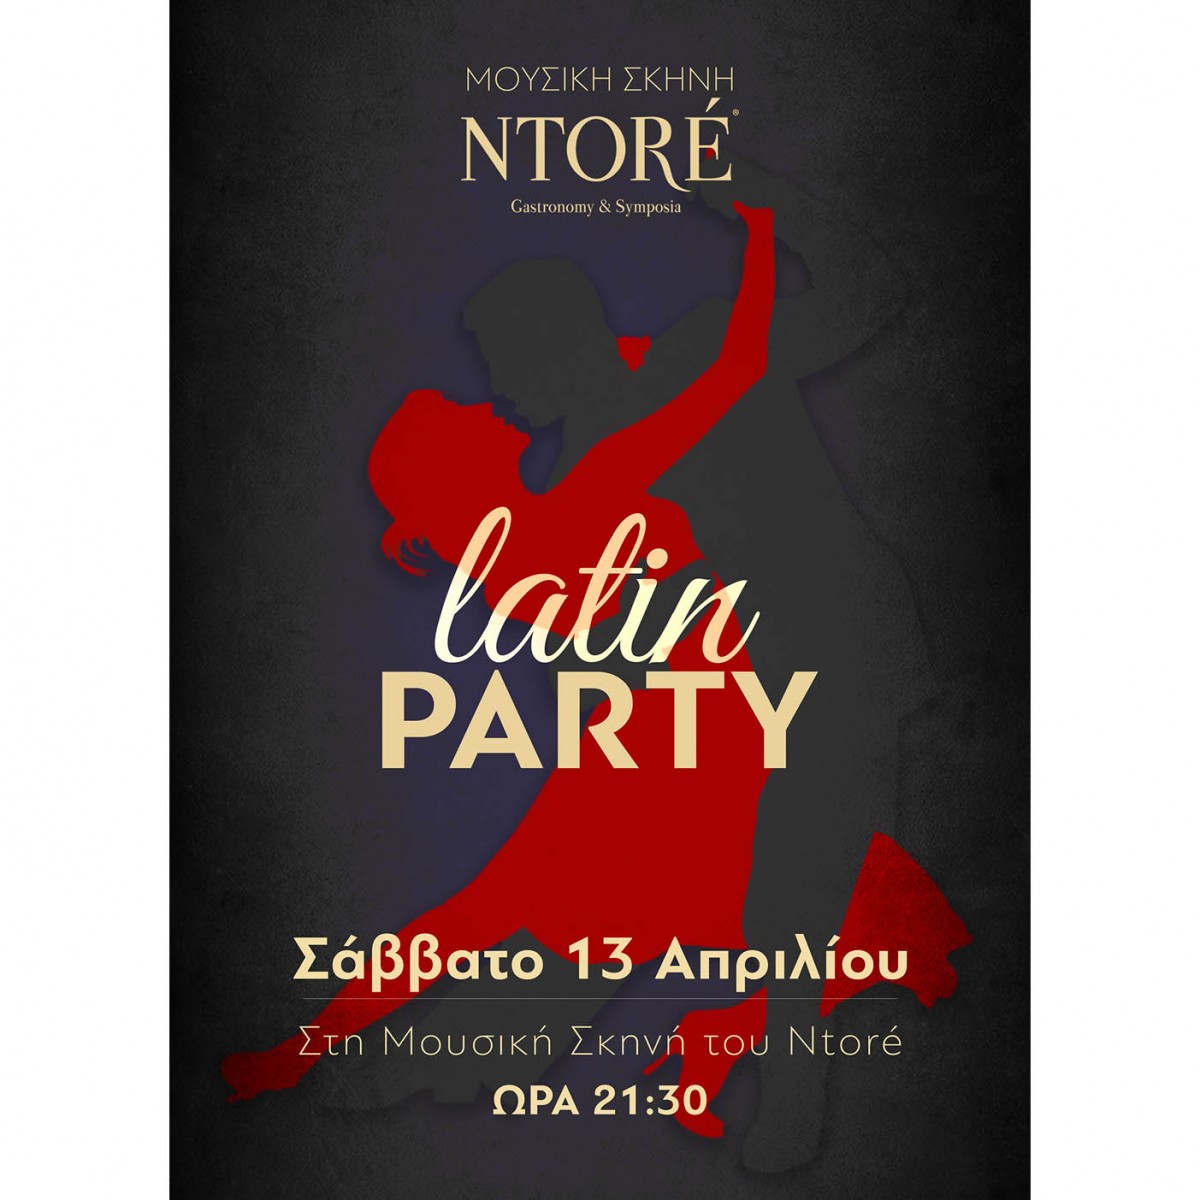 Latin Party στη Μουσική Σκηνή του Ntoré, Σάββατο 13 Απριλίου, 21:30